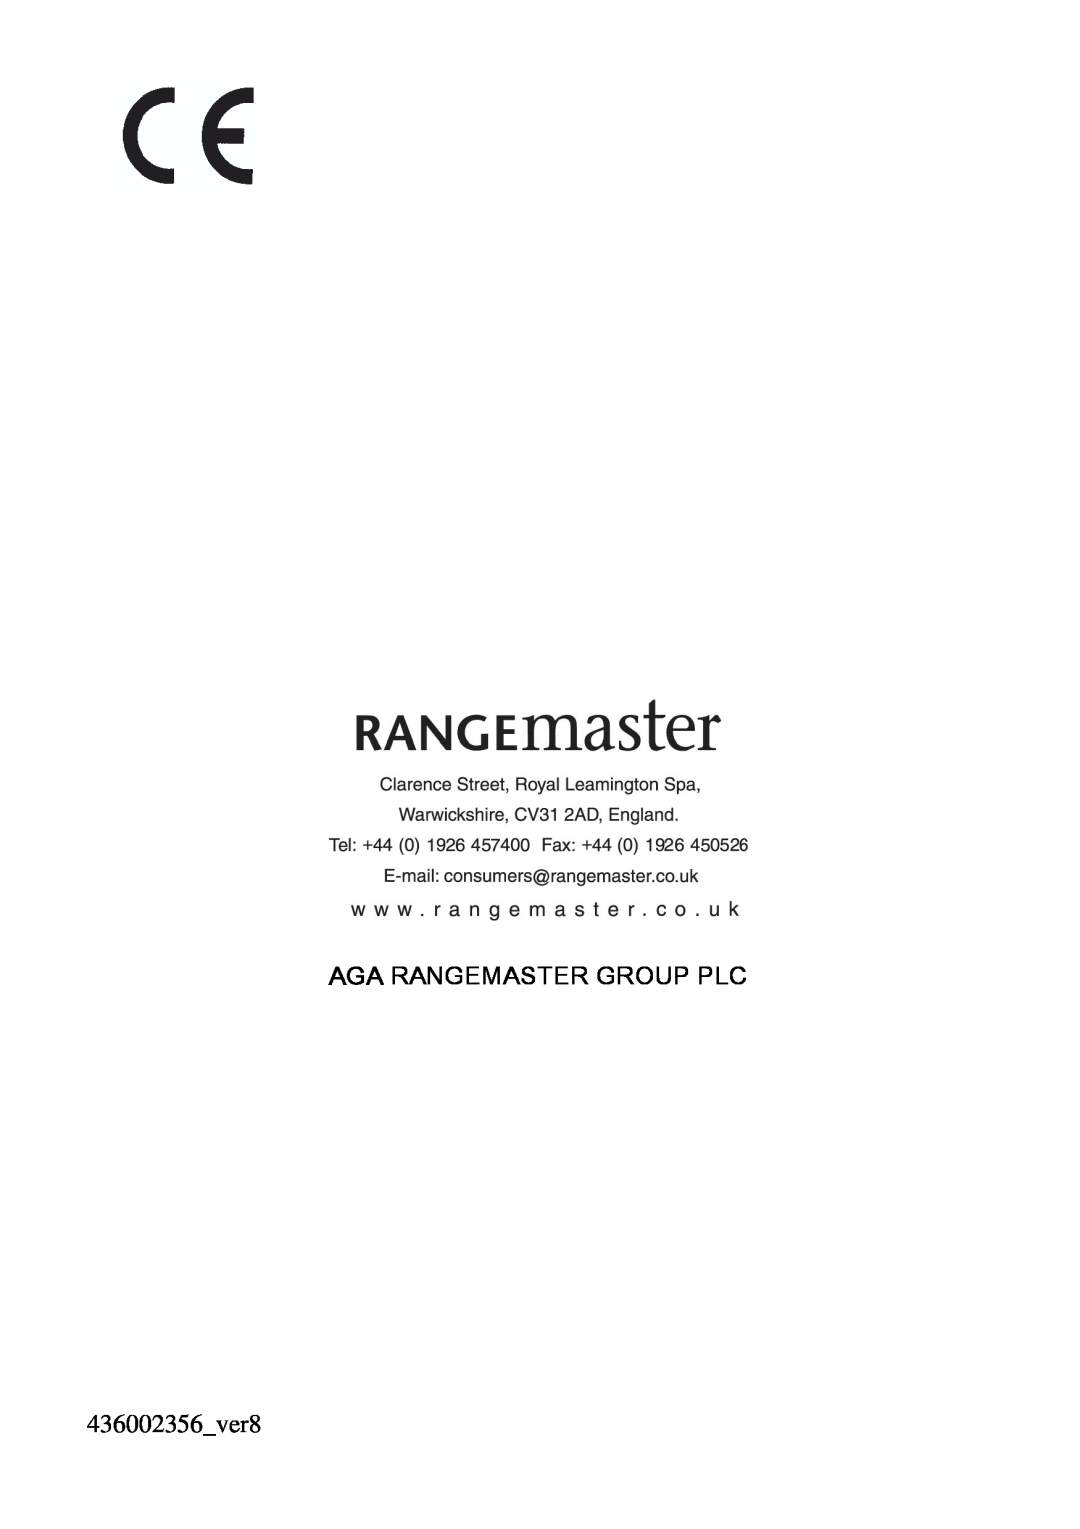 Rangemaster Chimney Hood manual Aga Rangemaster Group Plc, 436002356 ver8 